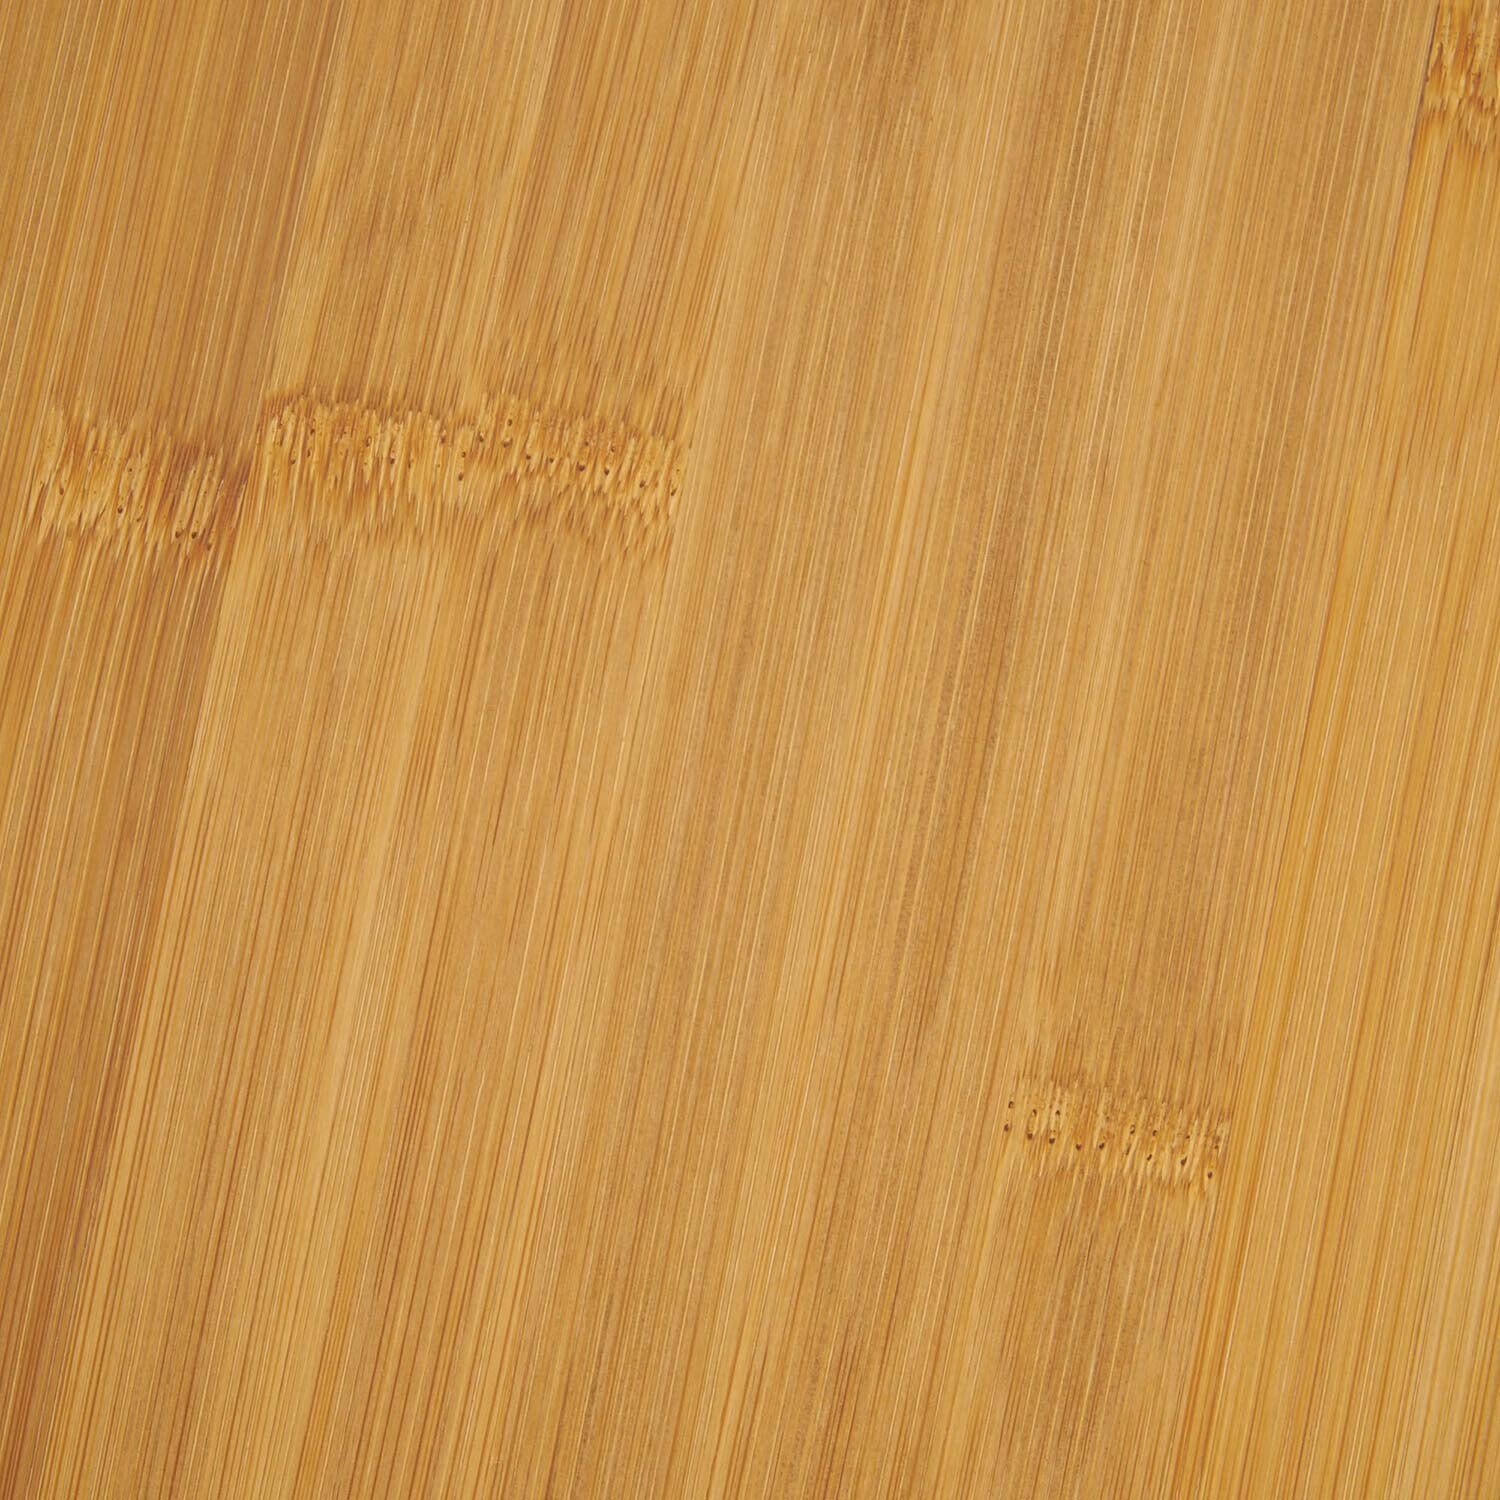 Premium Bamboo Chopping Board - Natural / Large Image 4